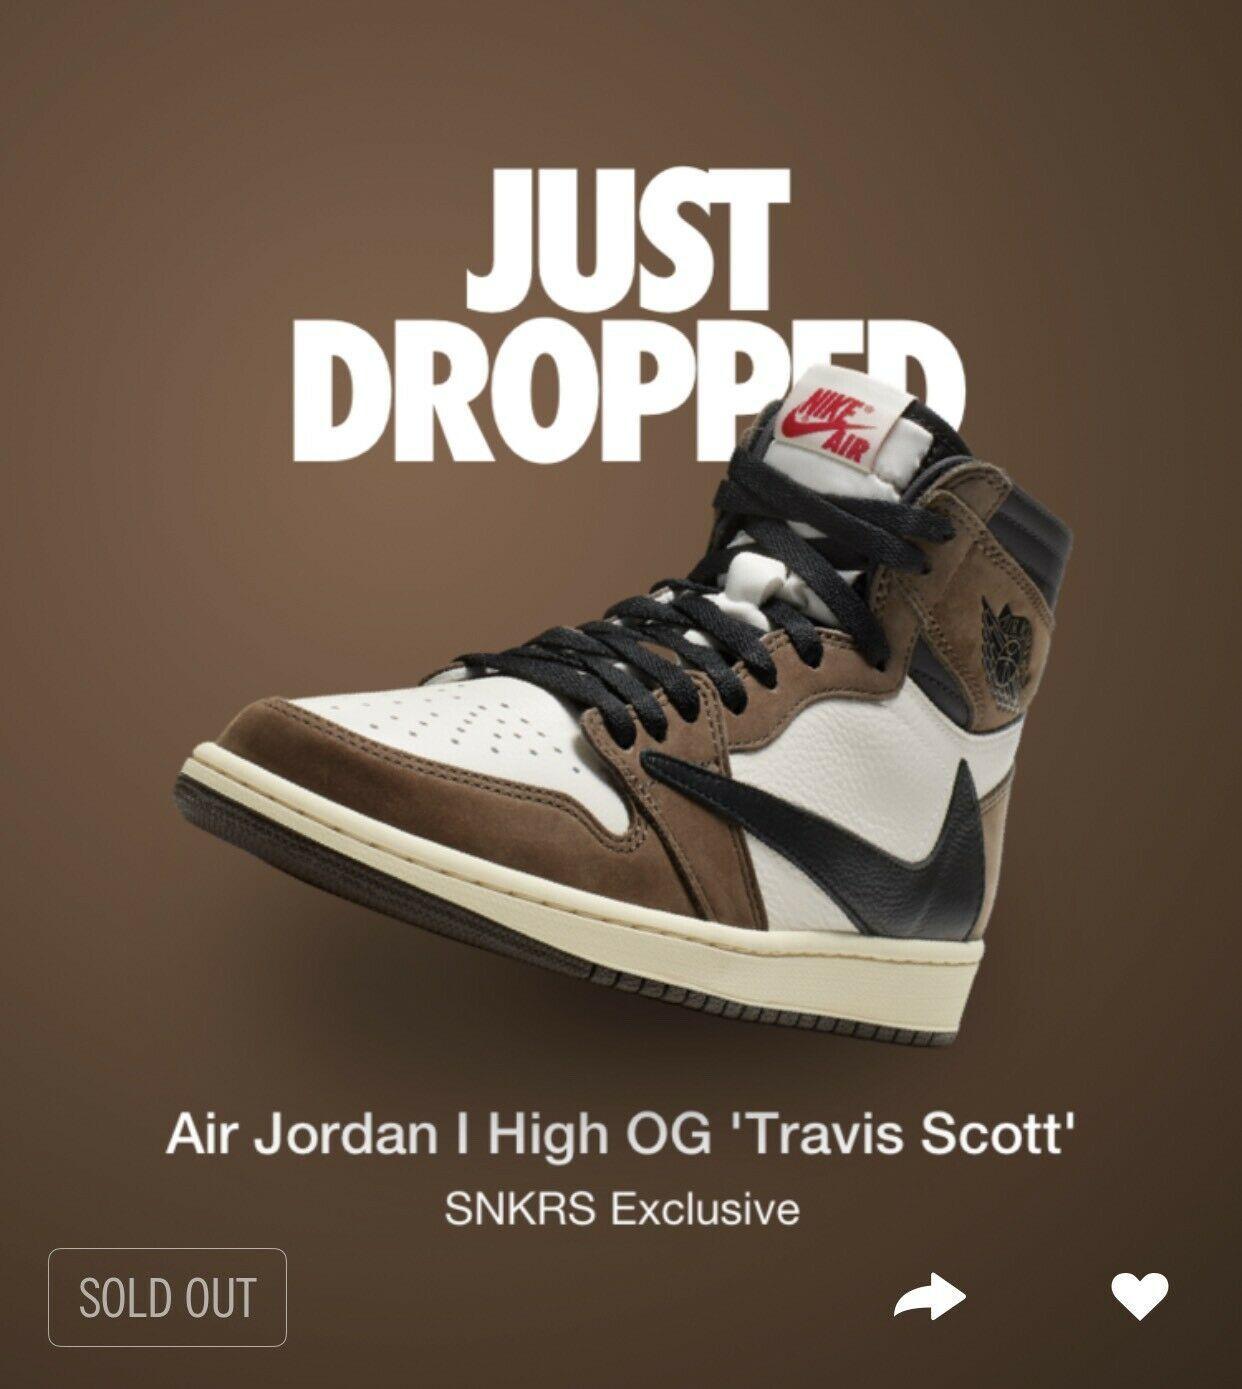 Details about 2019 Nike Air Jordan 1 Travis Scott High